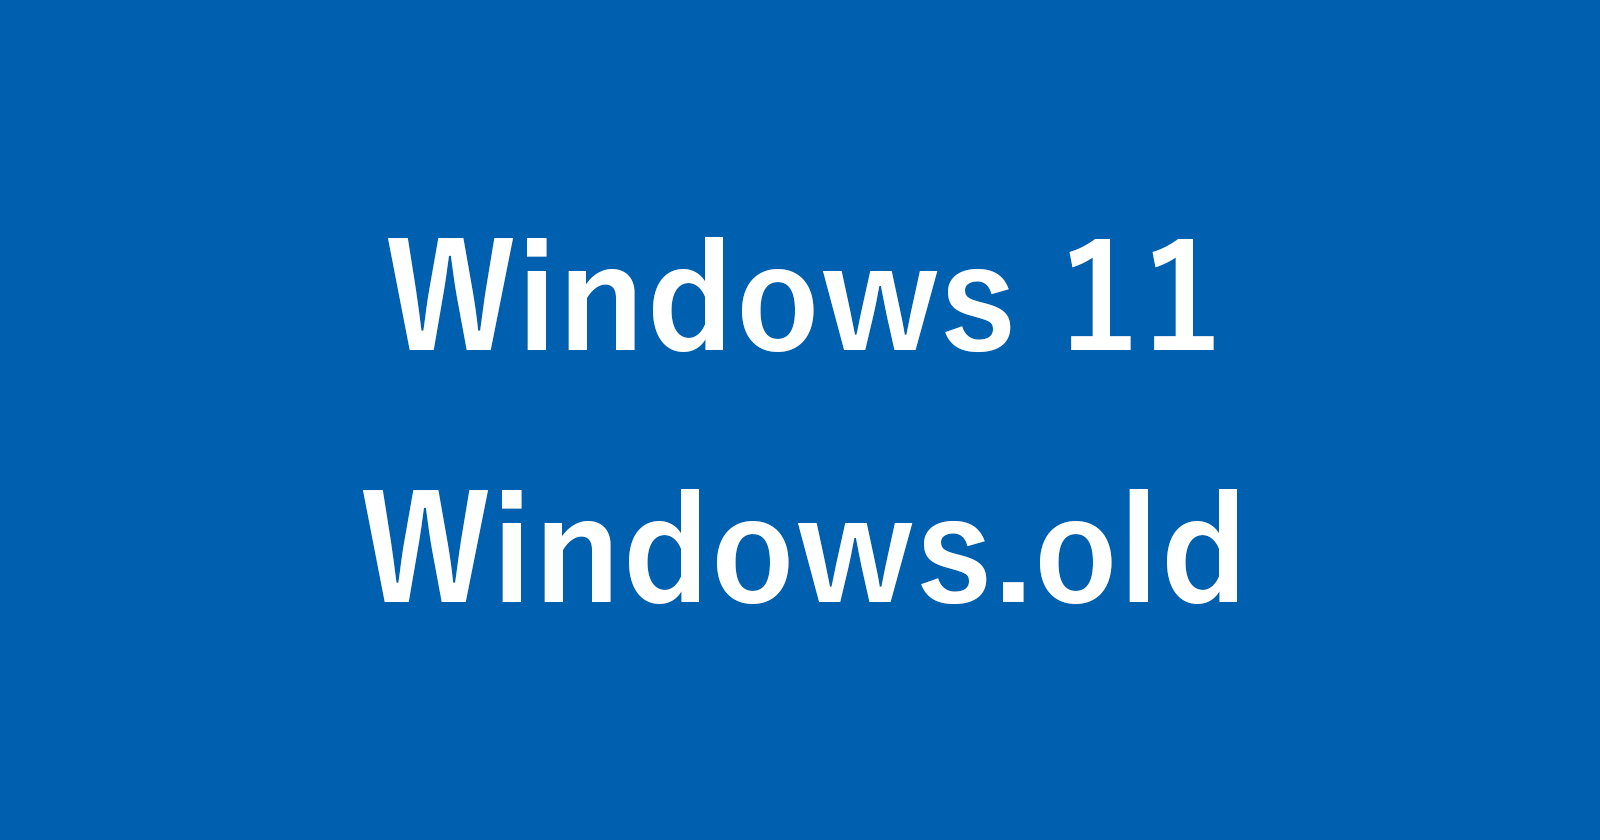 windows 11 delete windowsold